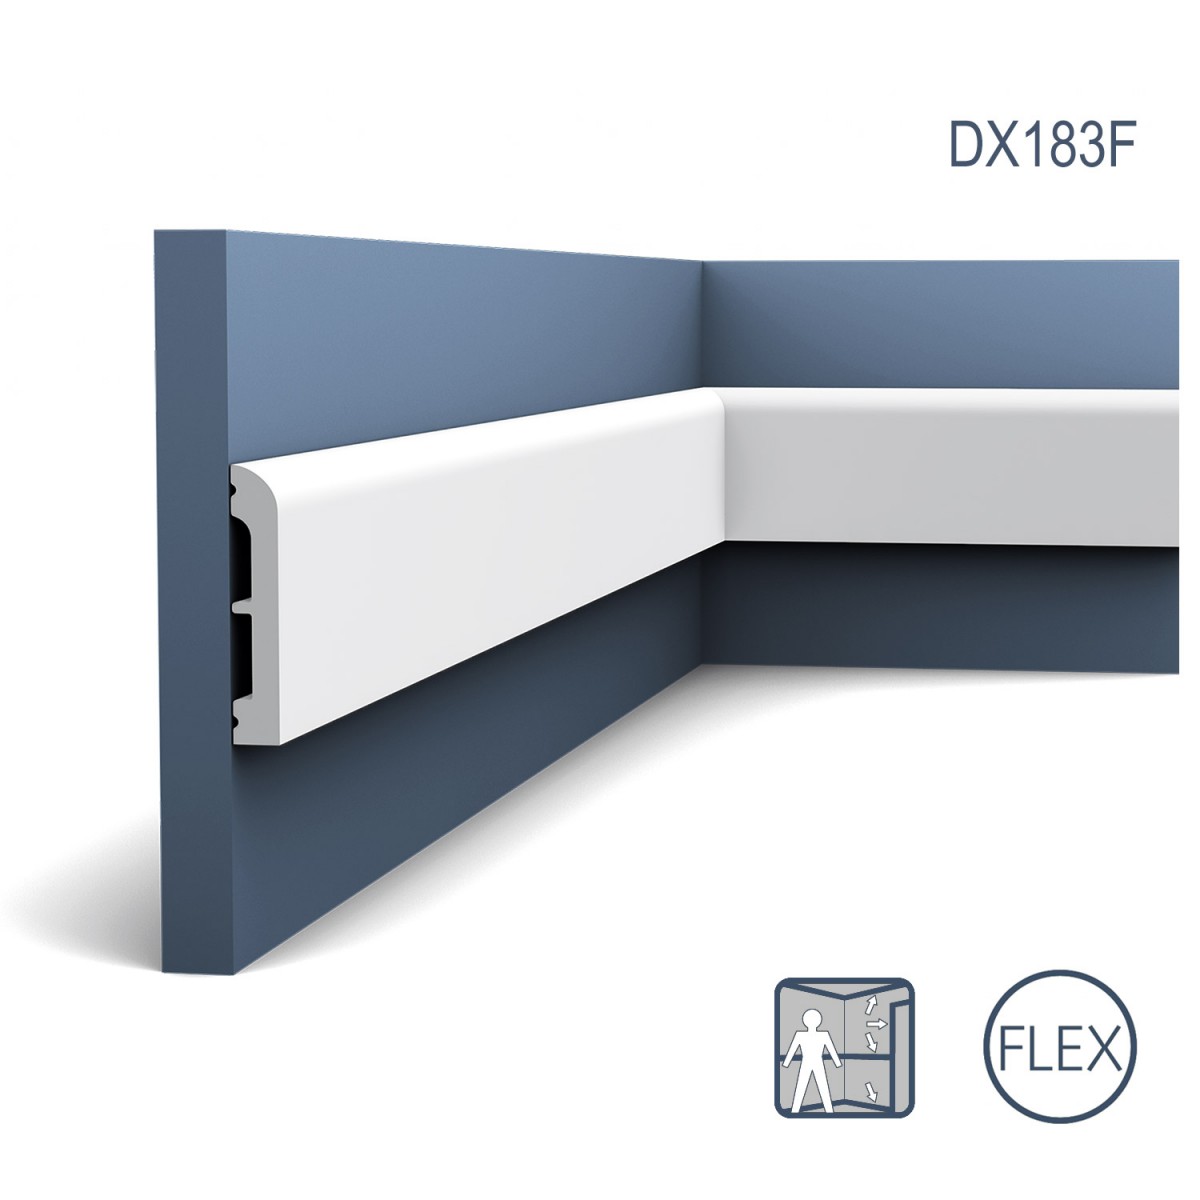 Plinta Flex Axxent SX183F, Dimensiuni: 200 X 1.3 X 7.5 cm, Orac Decor, Plinte decorative 